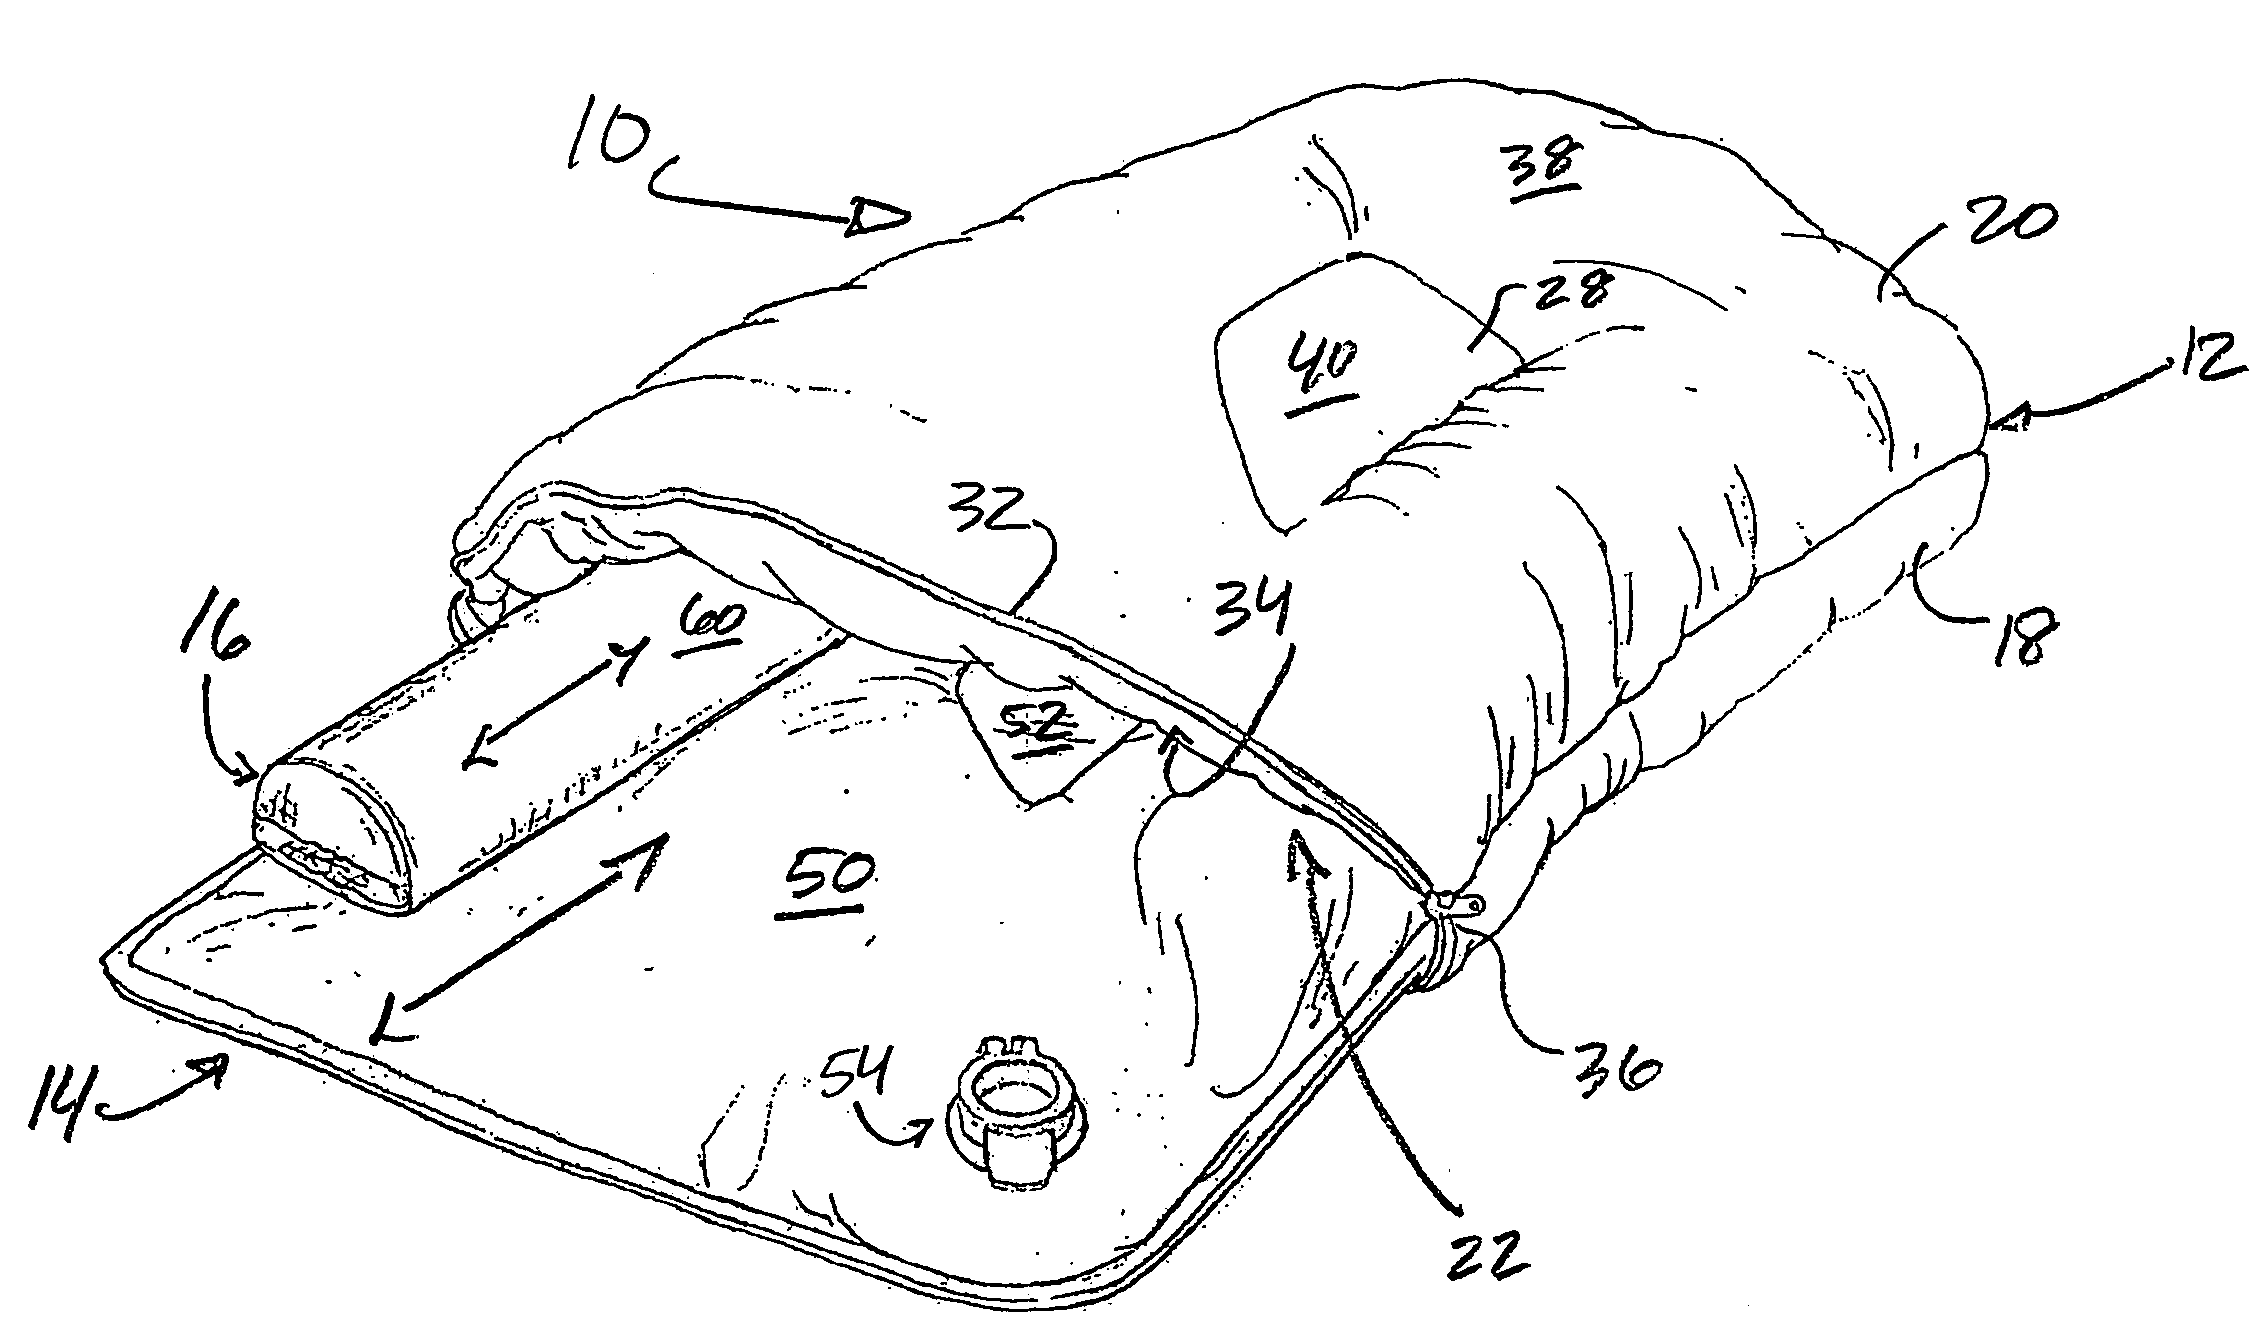 Multi-function cervical pillow